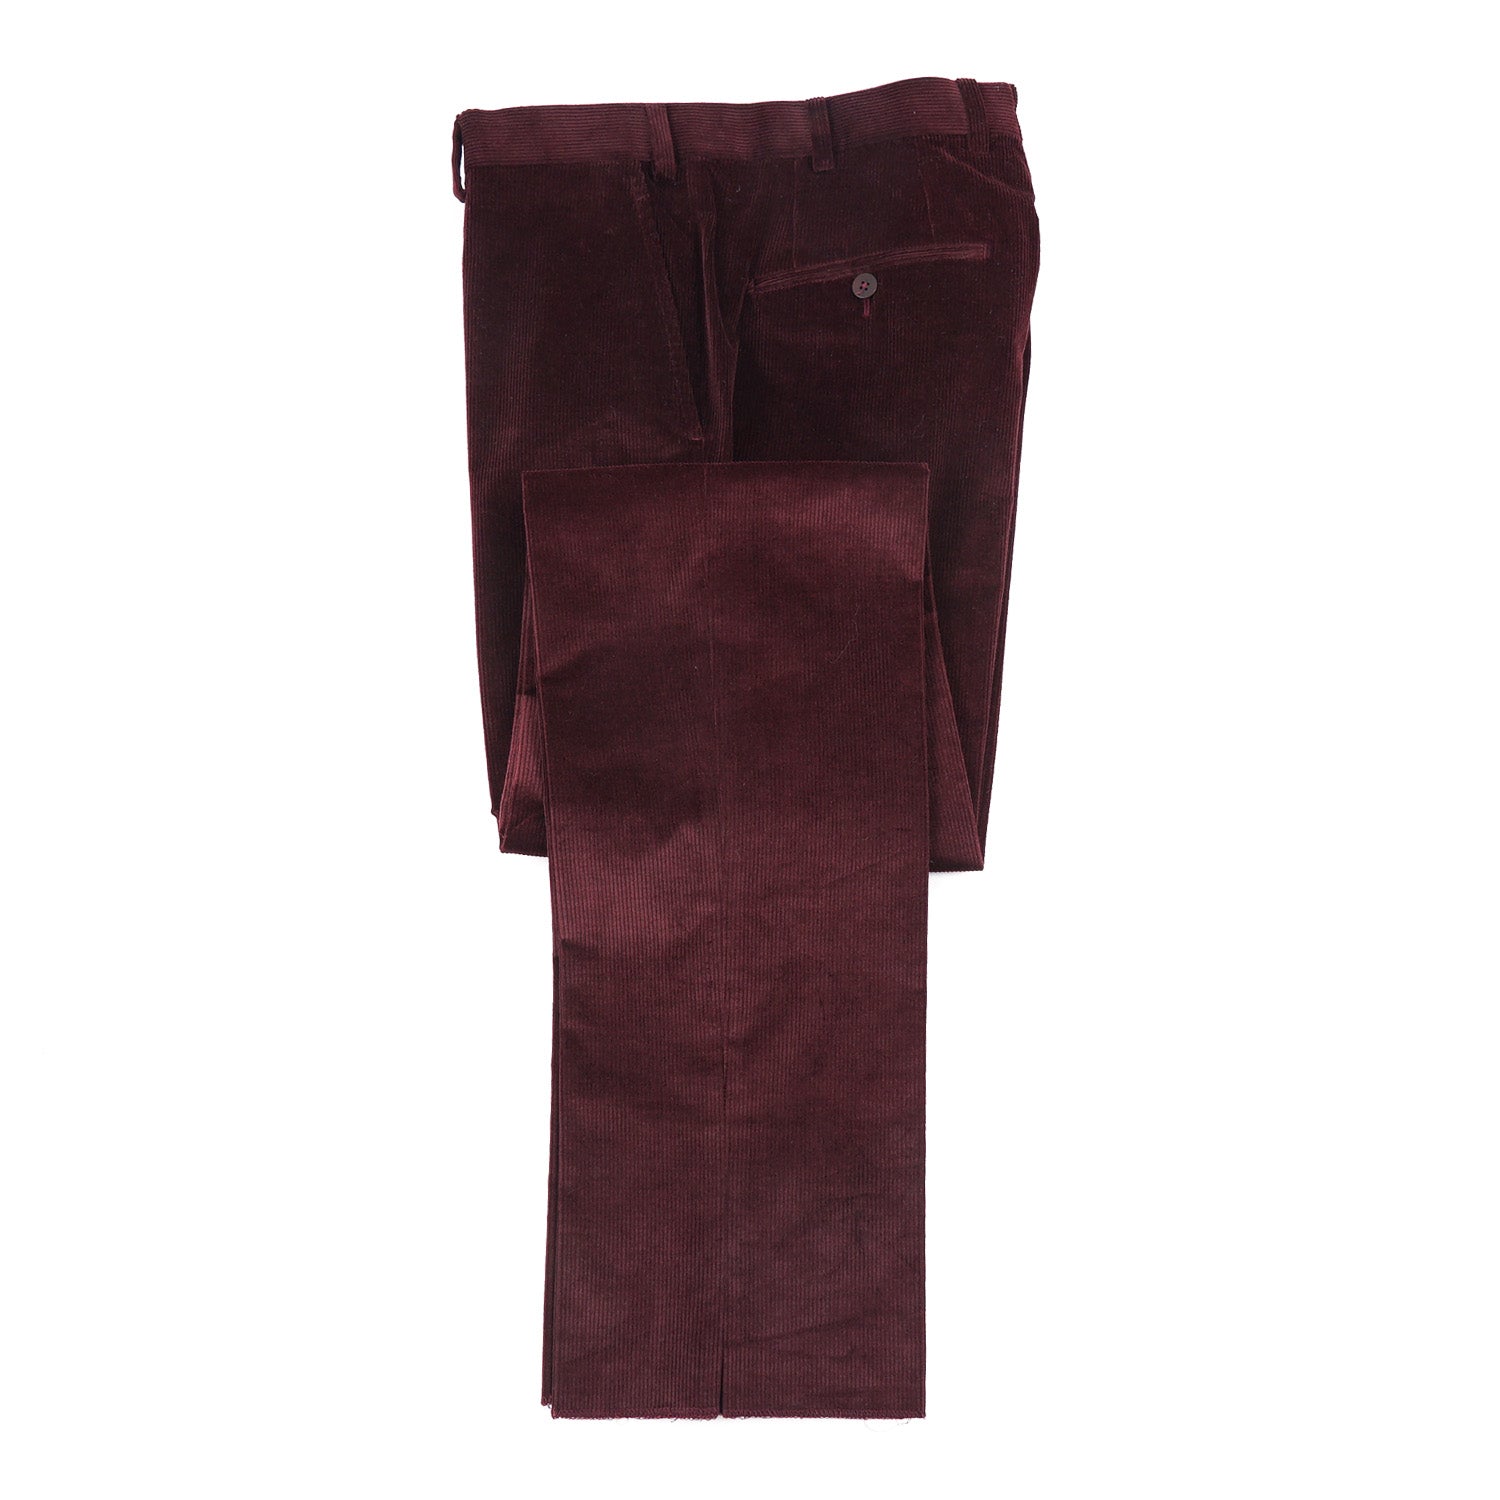 Isaia 'Sanita' Corduroy Cotton Dress Pants - Top Shelf Apparel